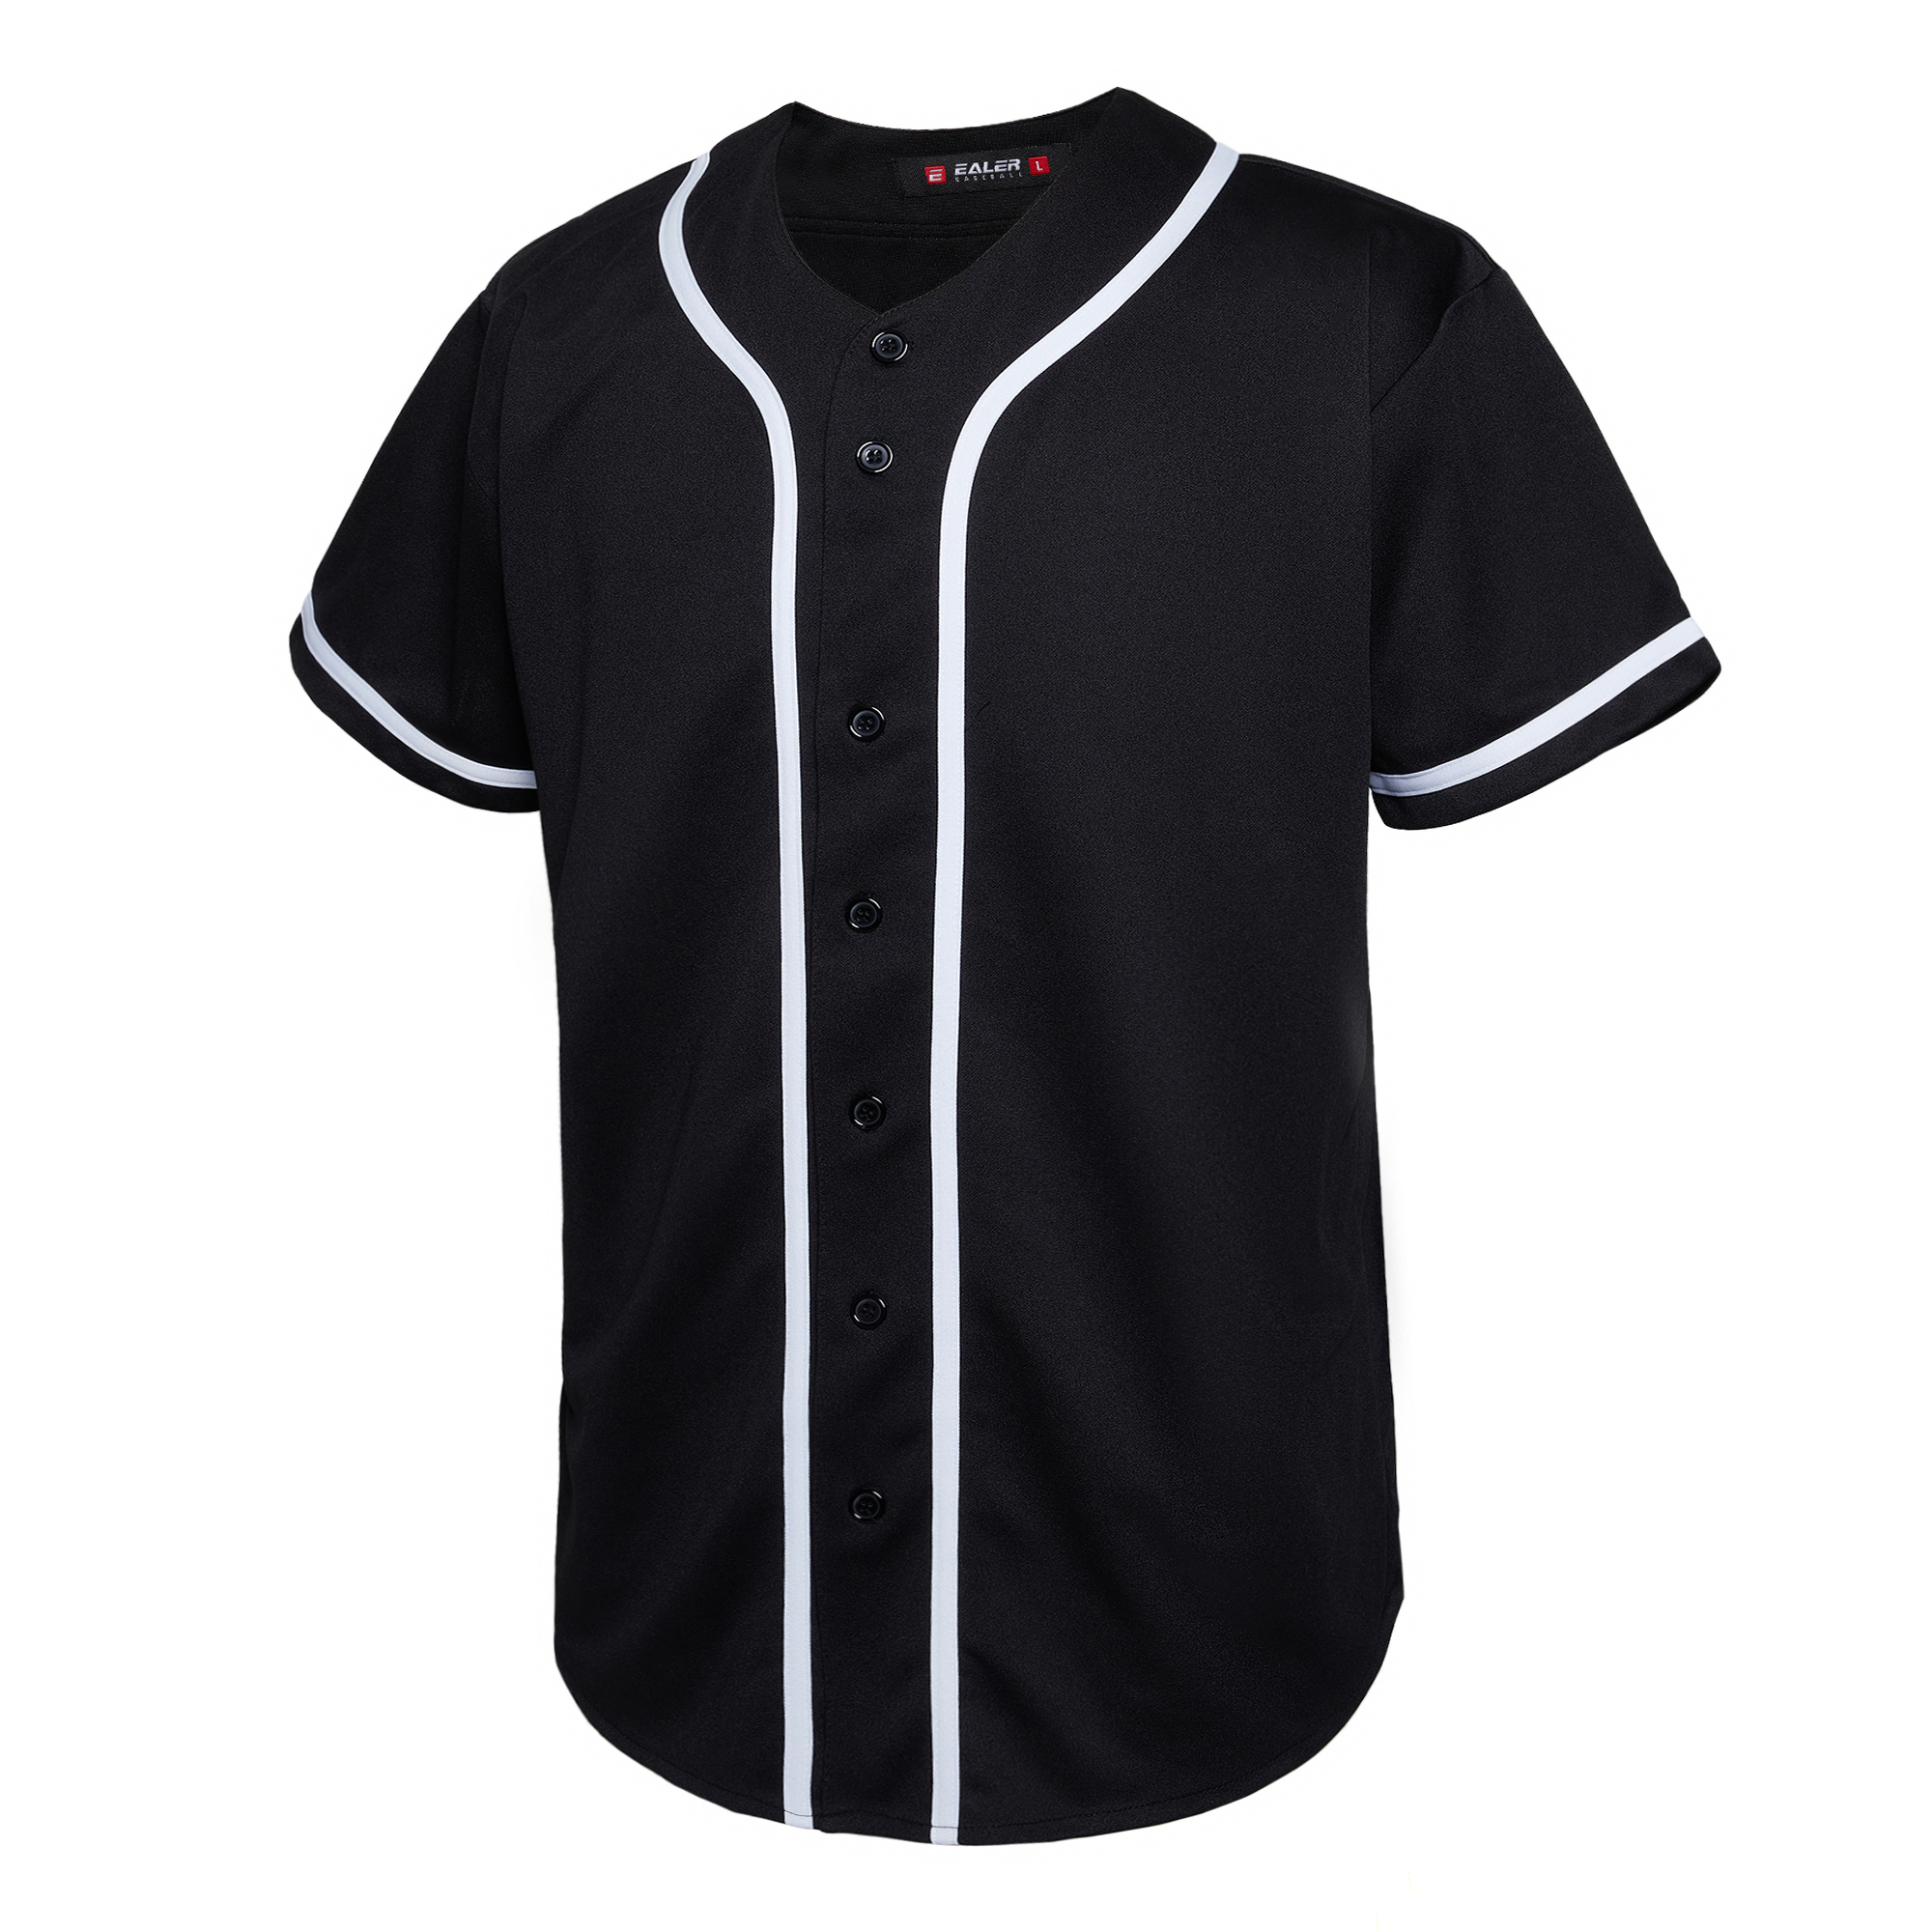 MESOSPERO Mens Button Down Shirts Short Sleeve Sports Uniforms Blank Baseball Jersey S-XXXL 